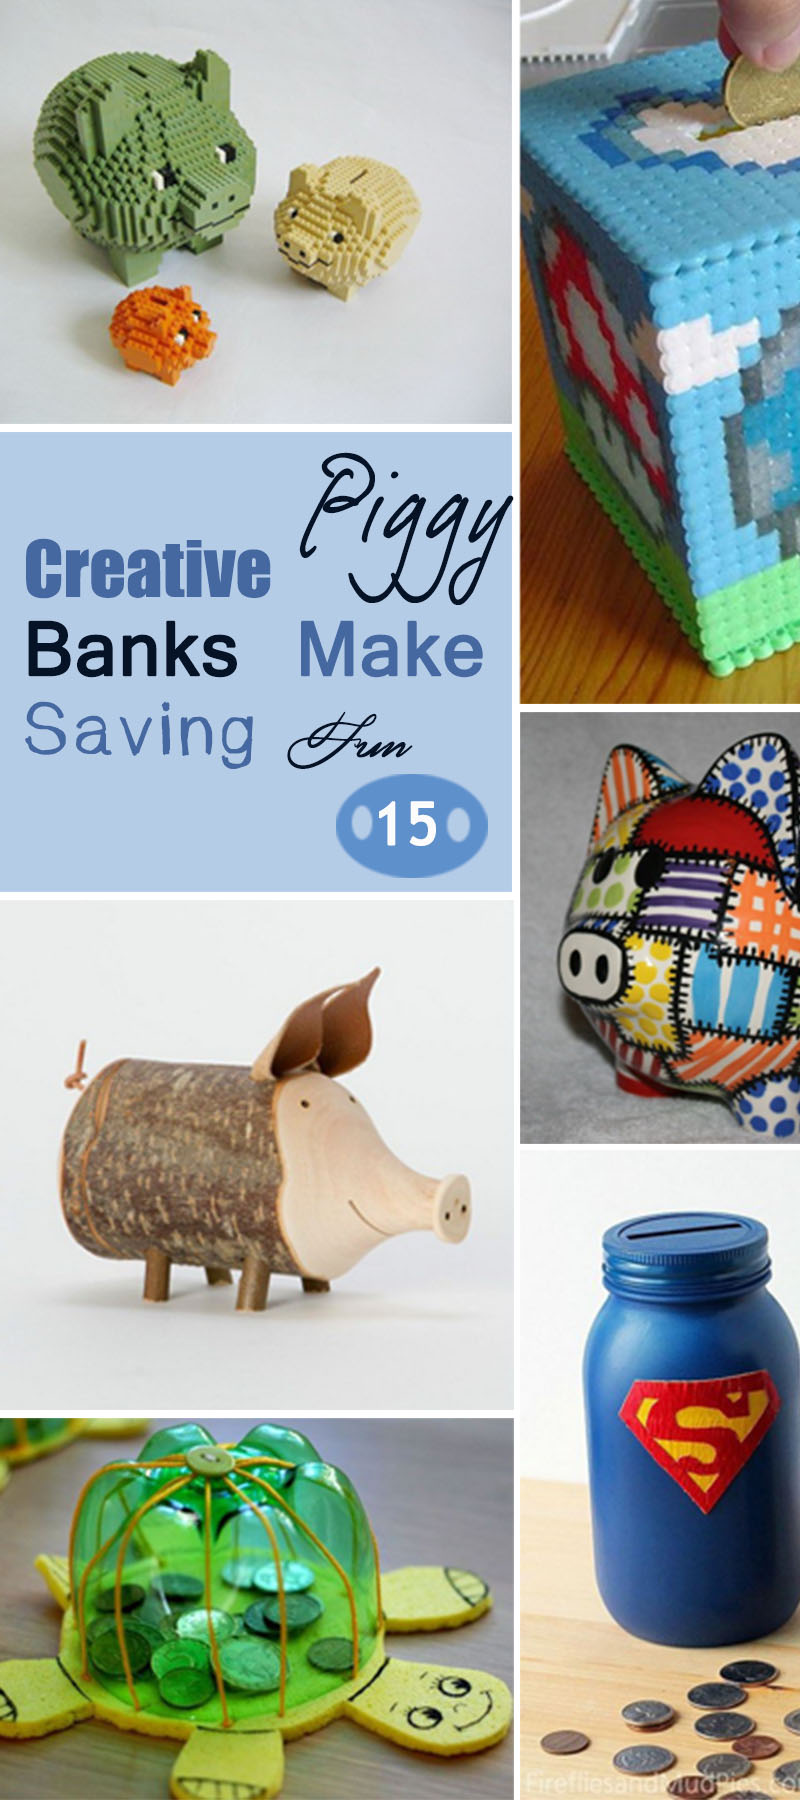 TCreative Piggy Banks Make Saving Fun!